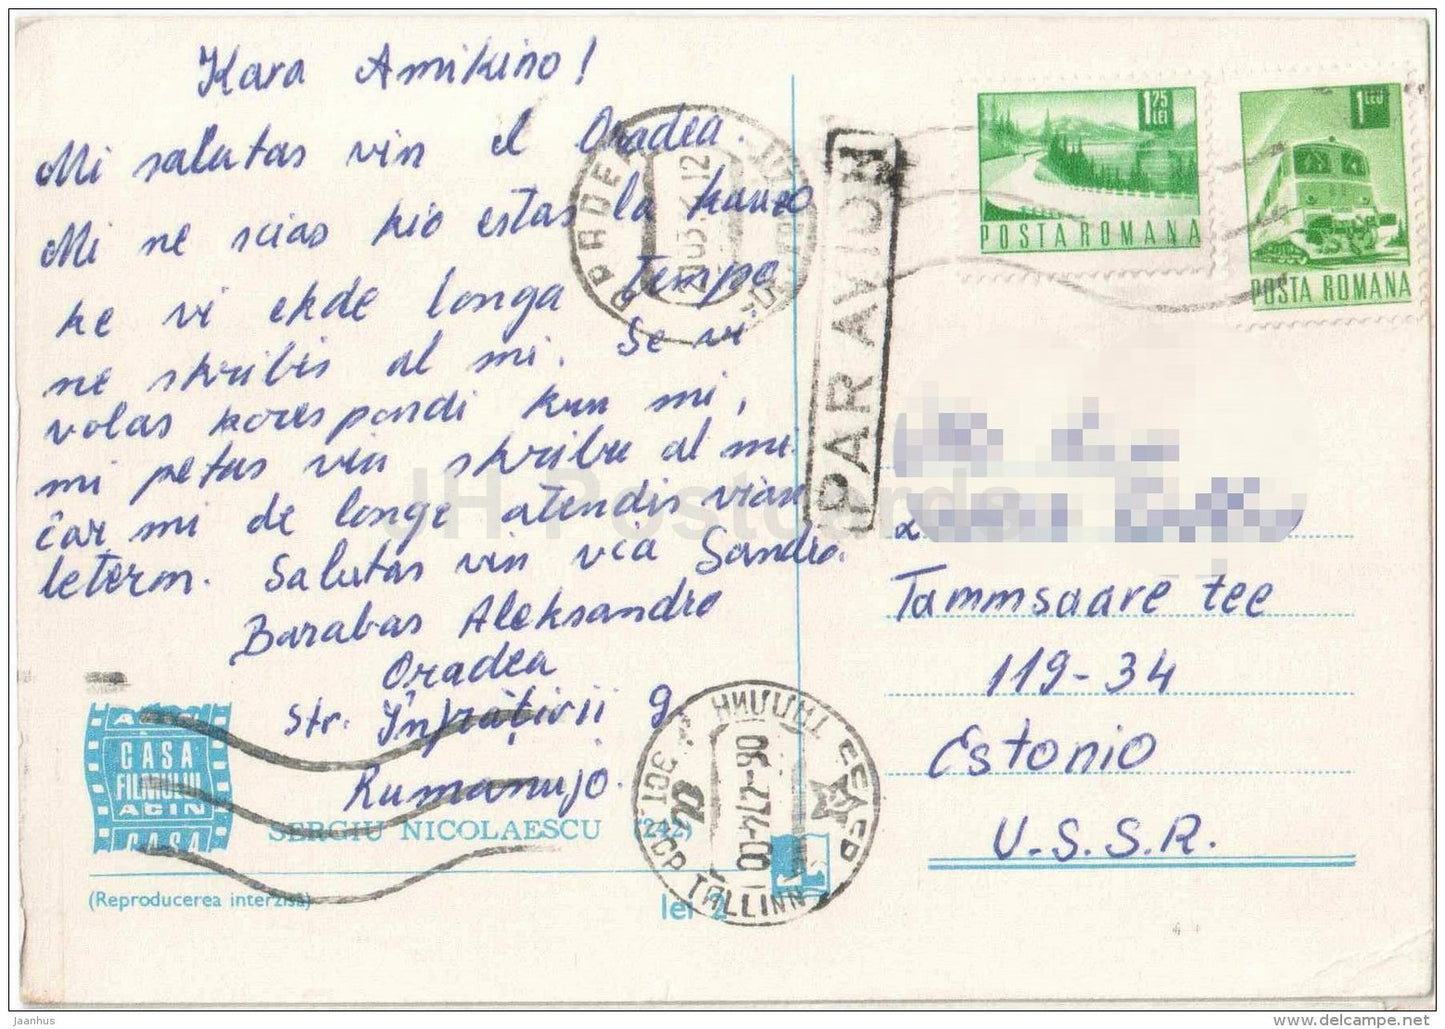 romanian film director Sergiu Nicolaescu - movie - Romania - sent from Romania to Estonia Tallinn - JH Postcards